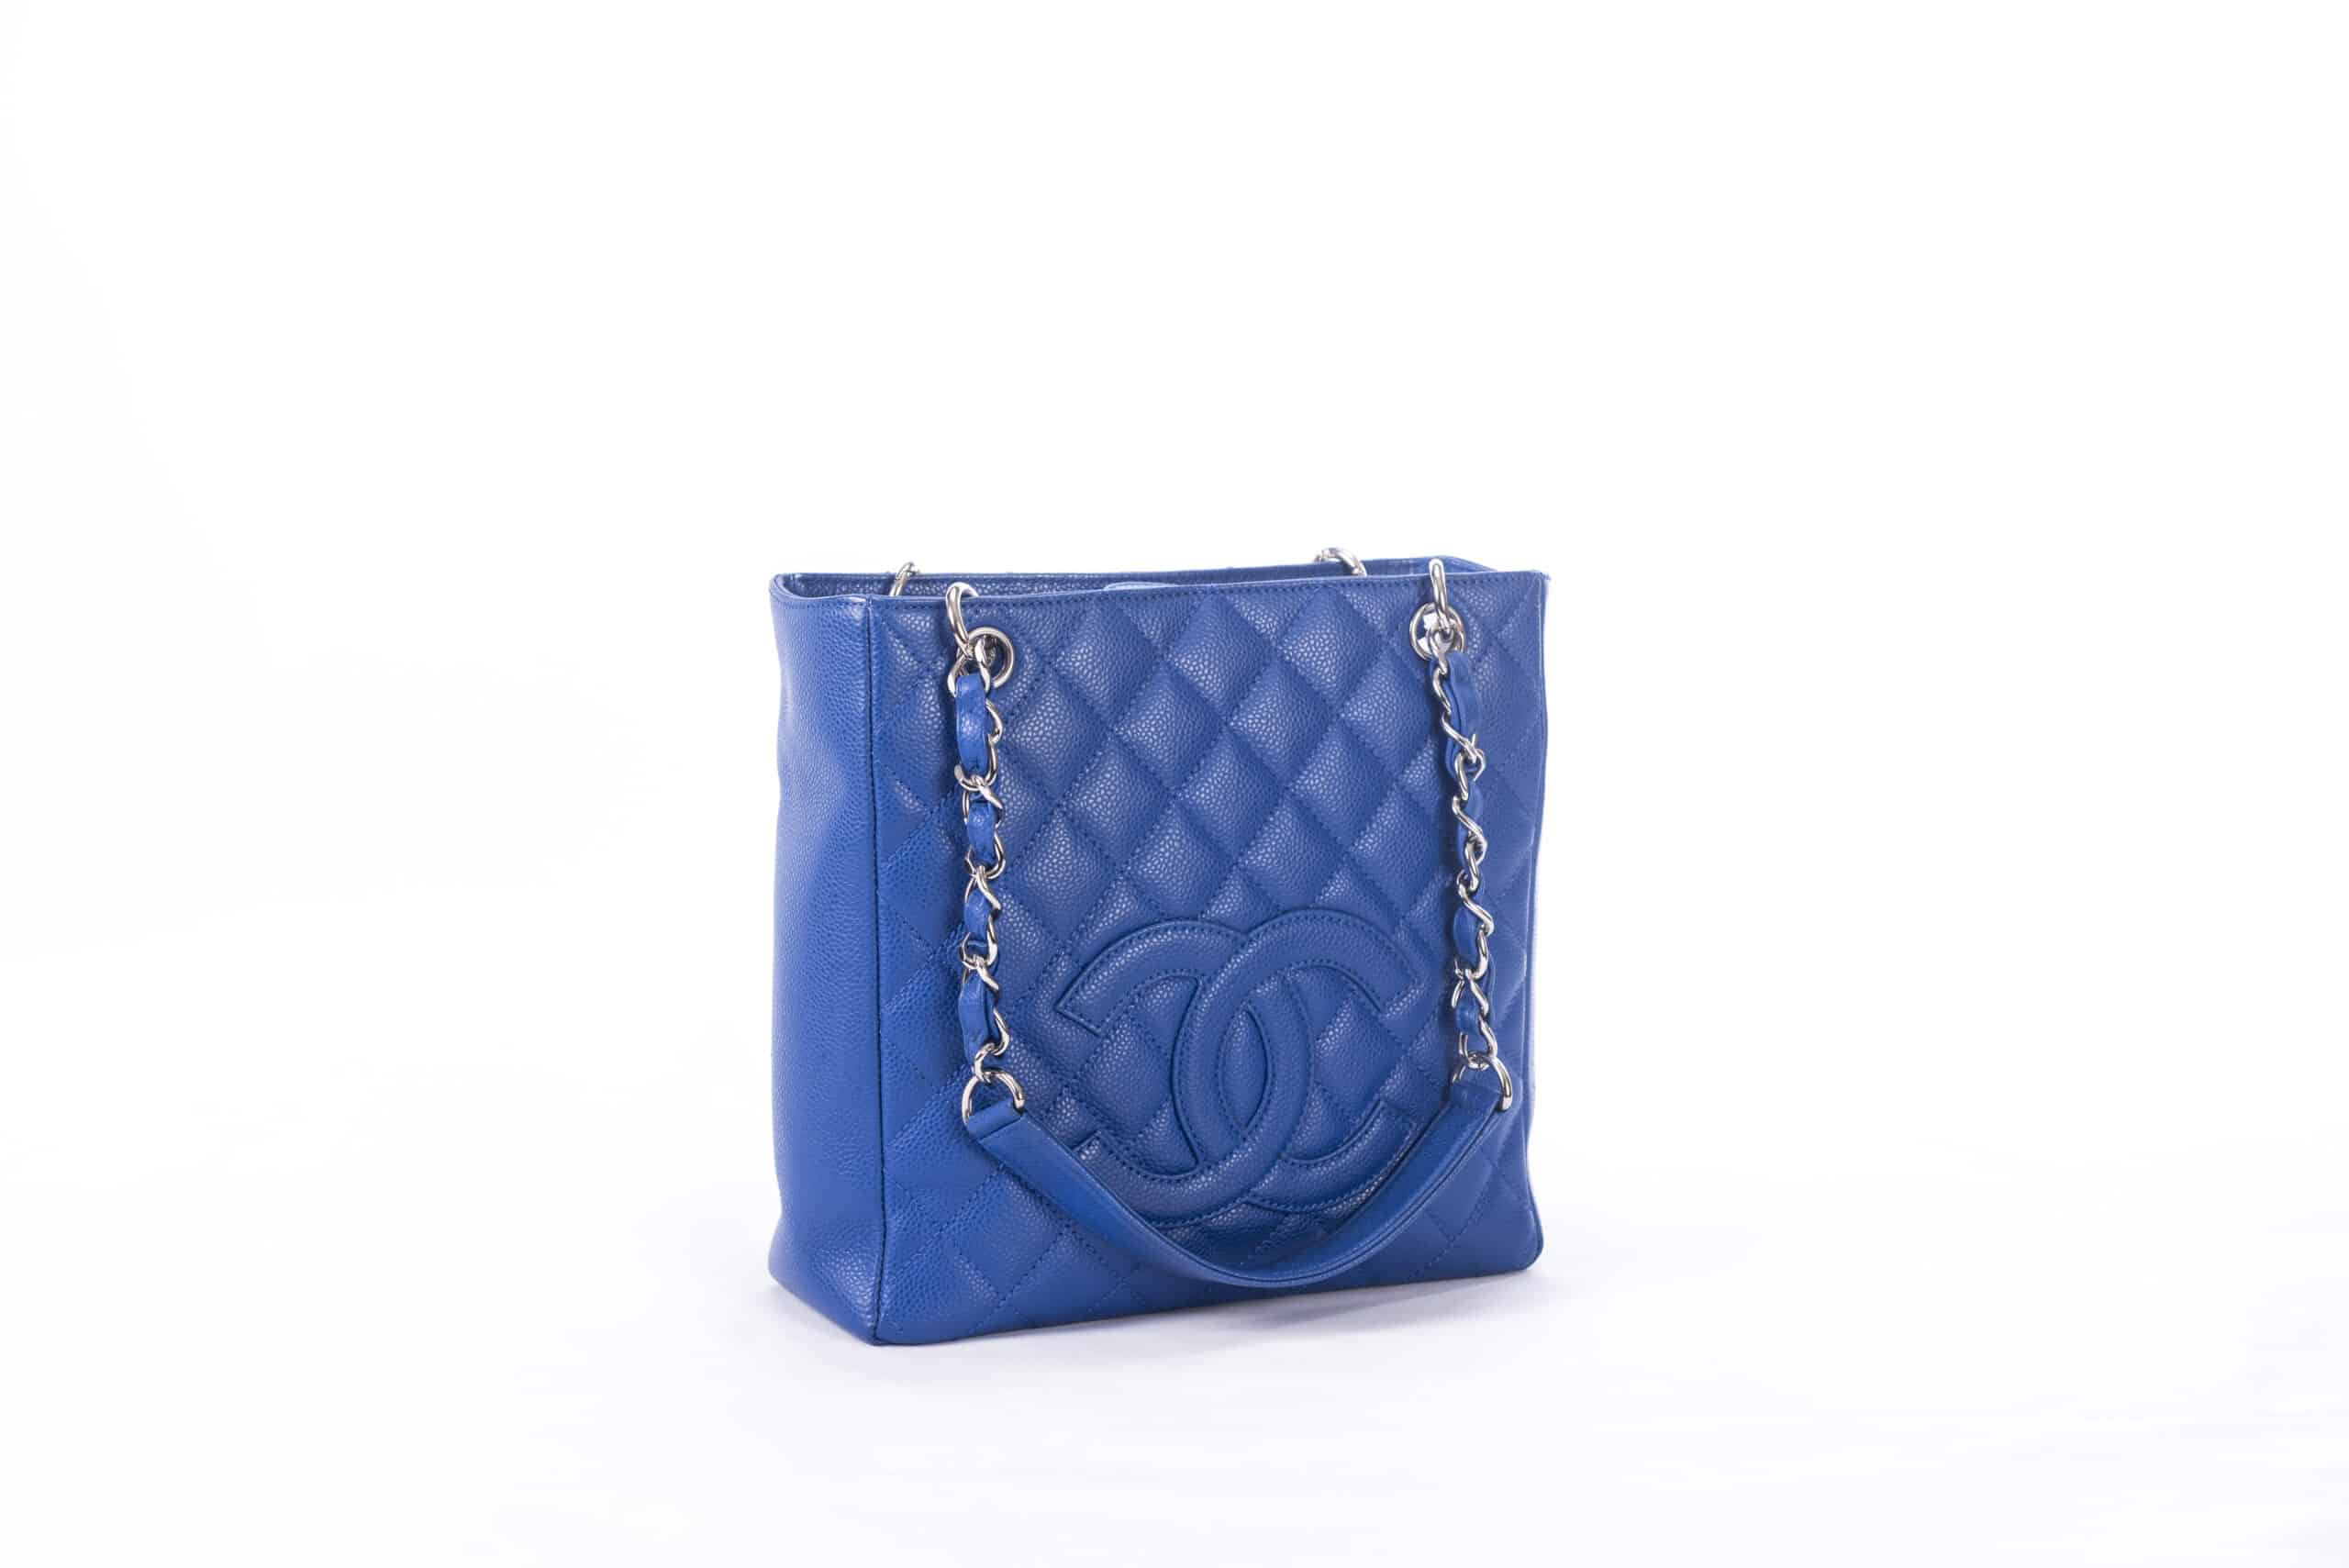 Chanel Blue Lizard Skin Medium Perfect Edge Flap Bag  vetobencom